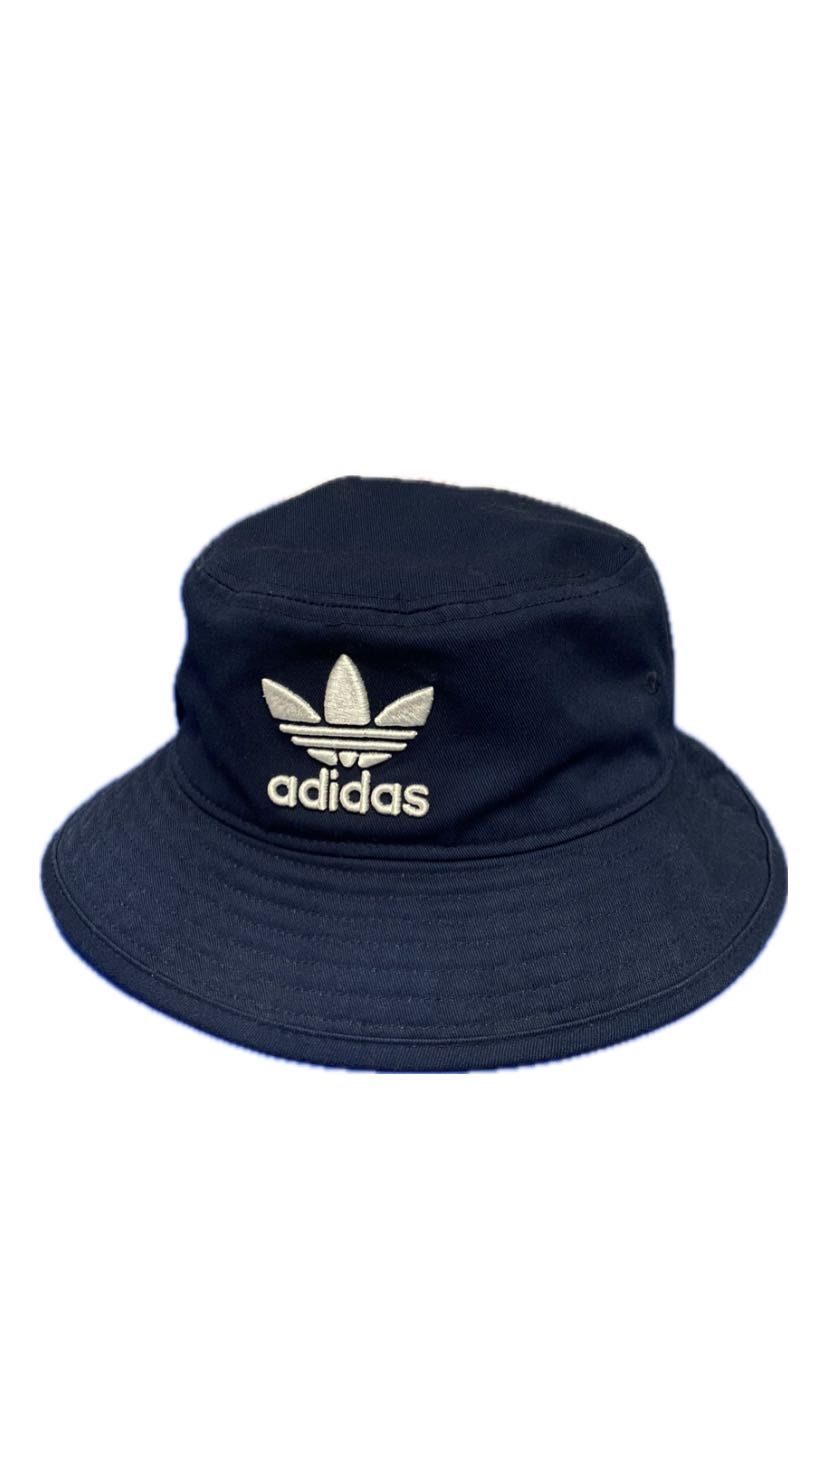 Adidas Originals bucket hat